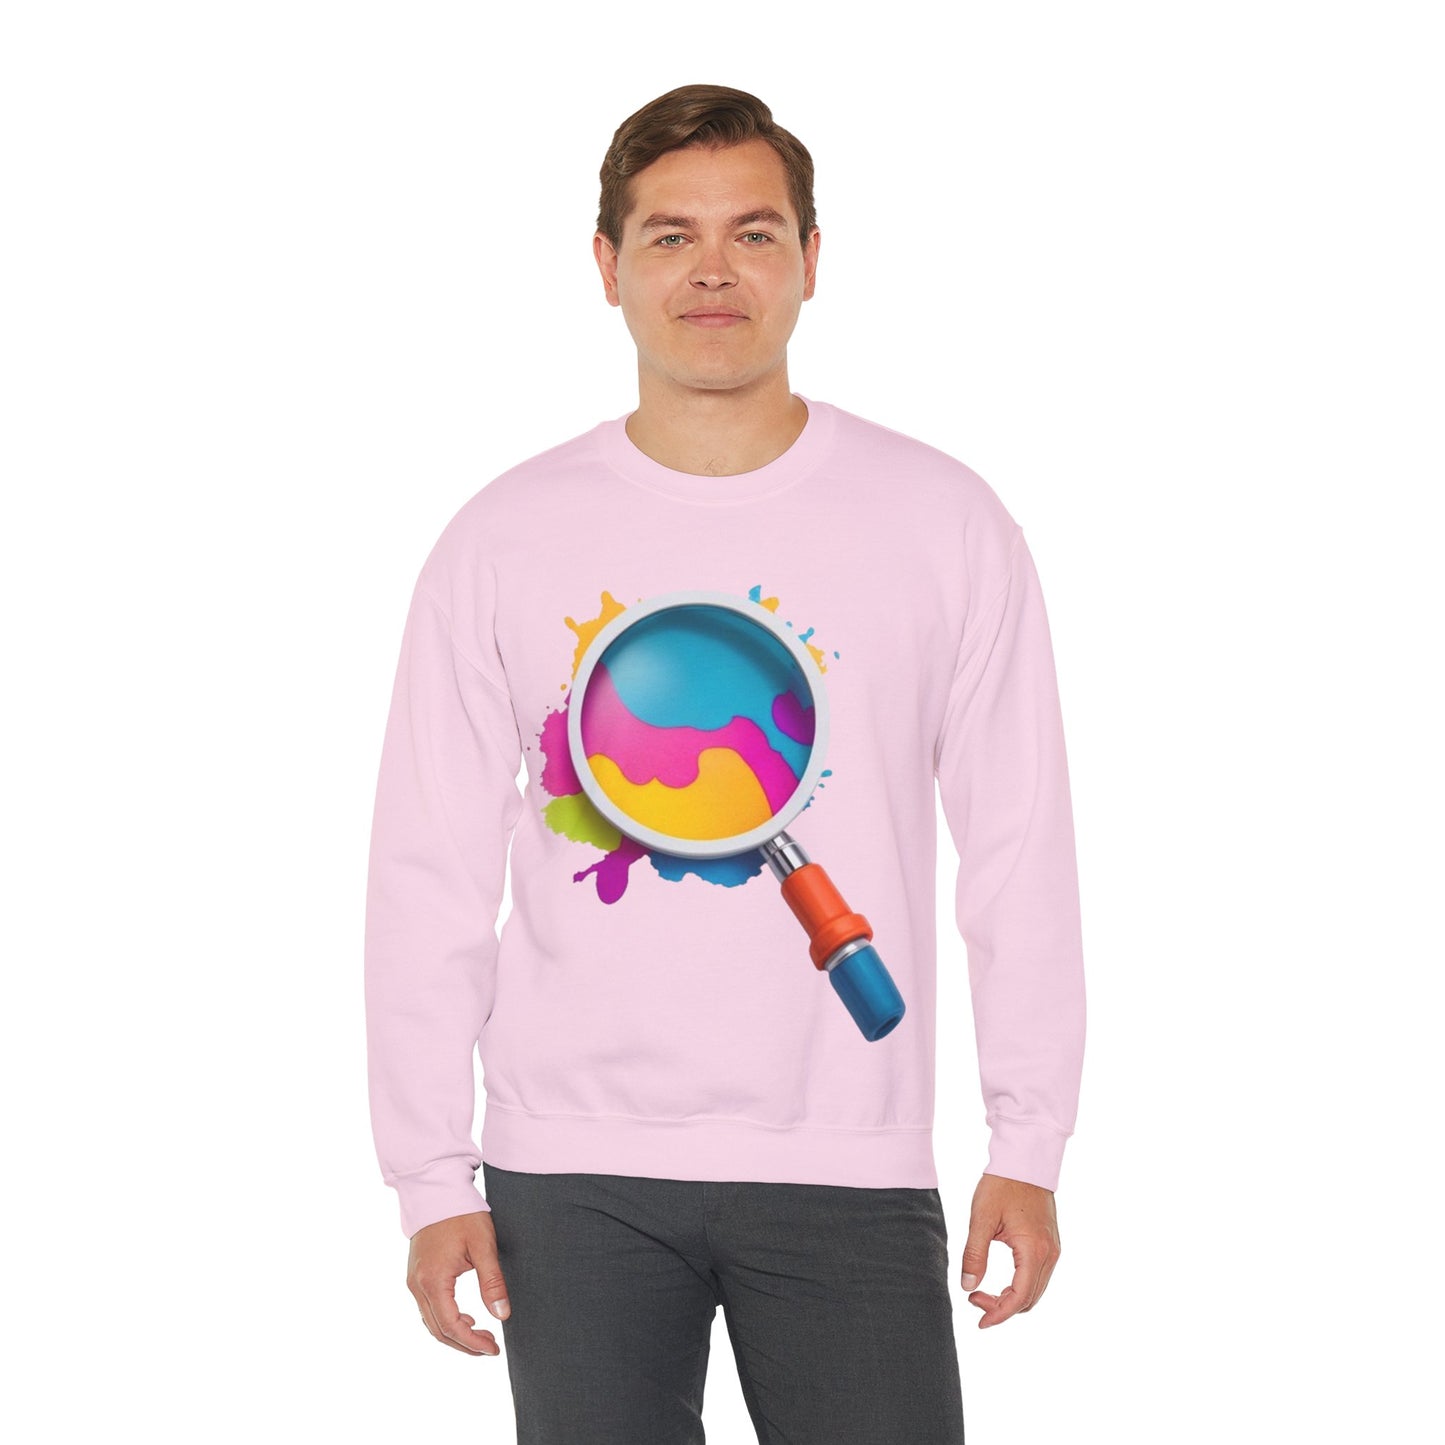 Colourful Magnifying Glass - Unisex Crewneck Sweatshirt